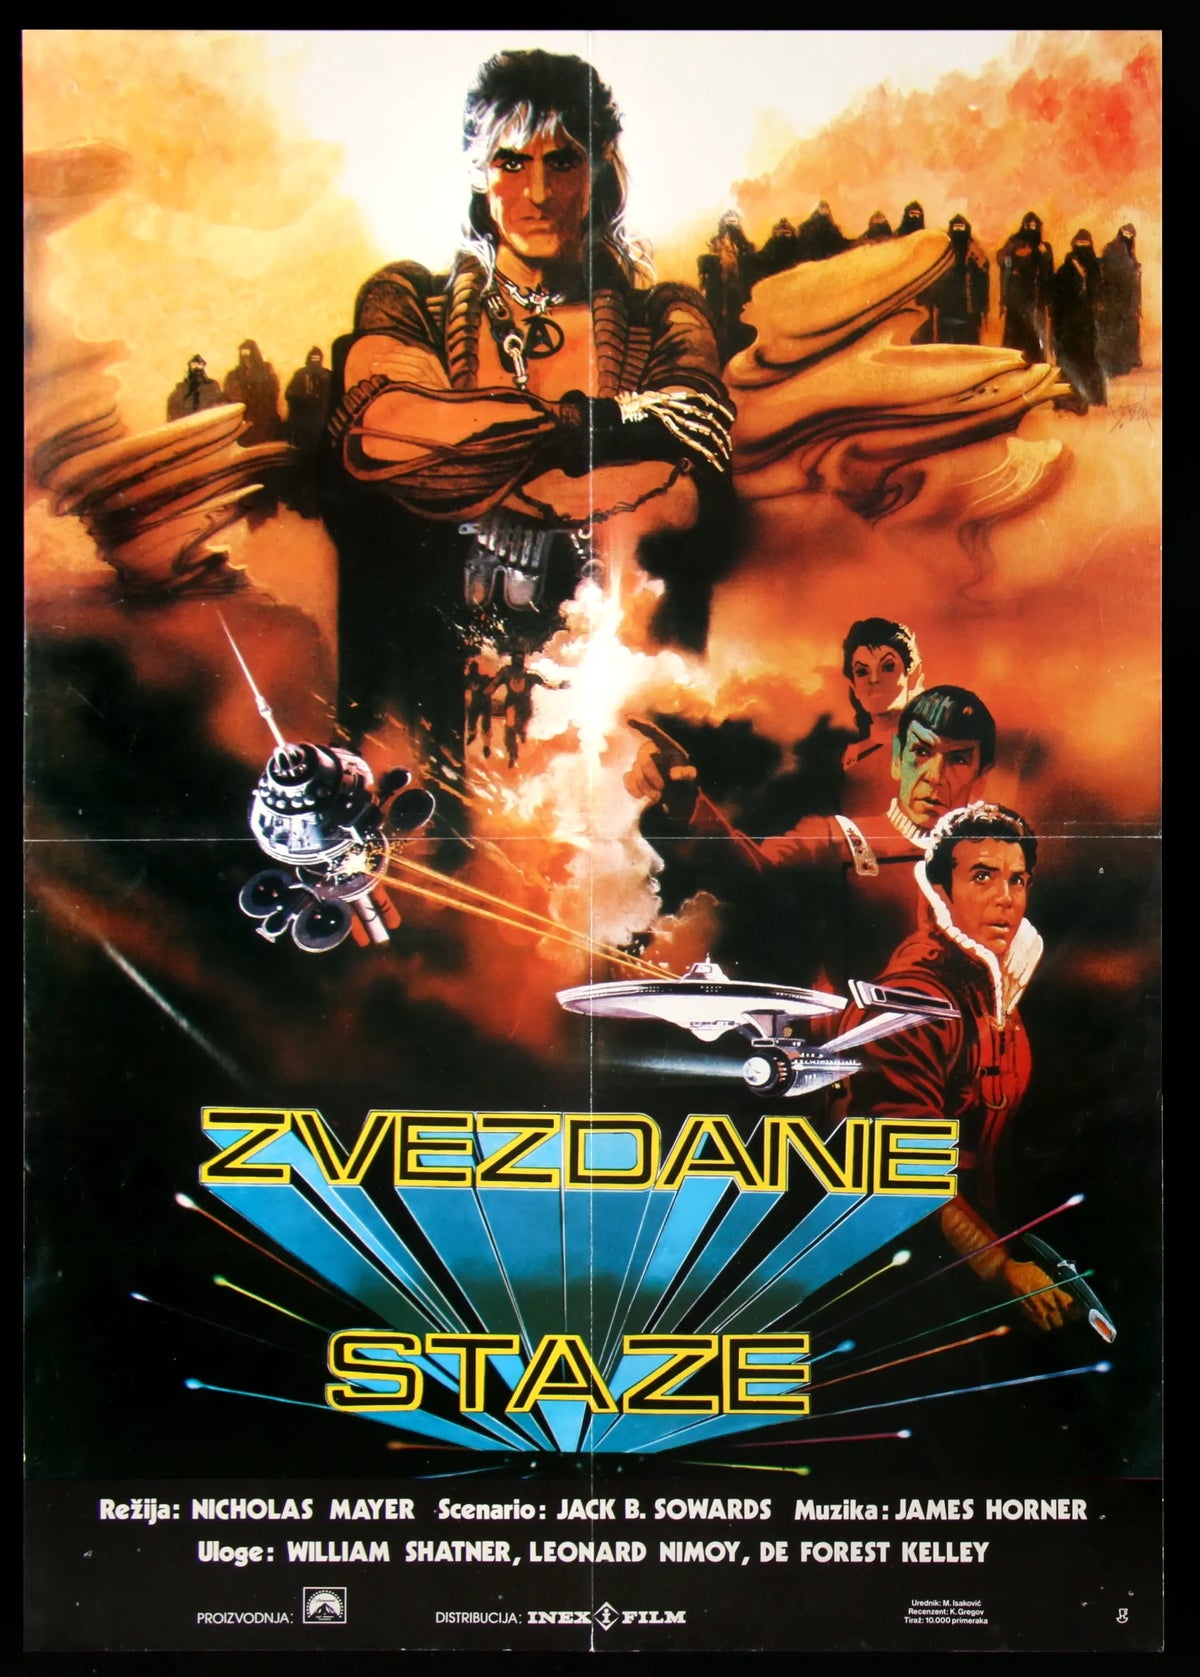 Star Trek II: The Wrath of Khan (1982) original movie poster for sale at Original Film Art